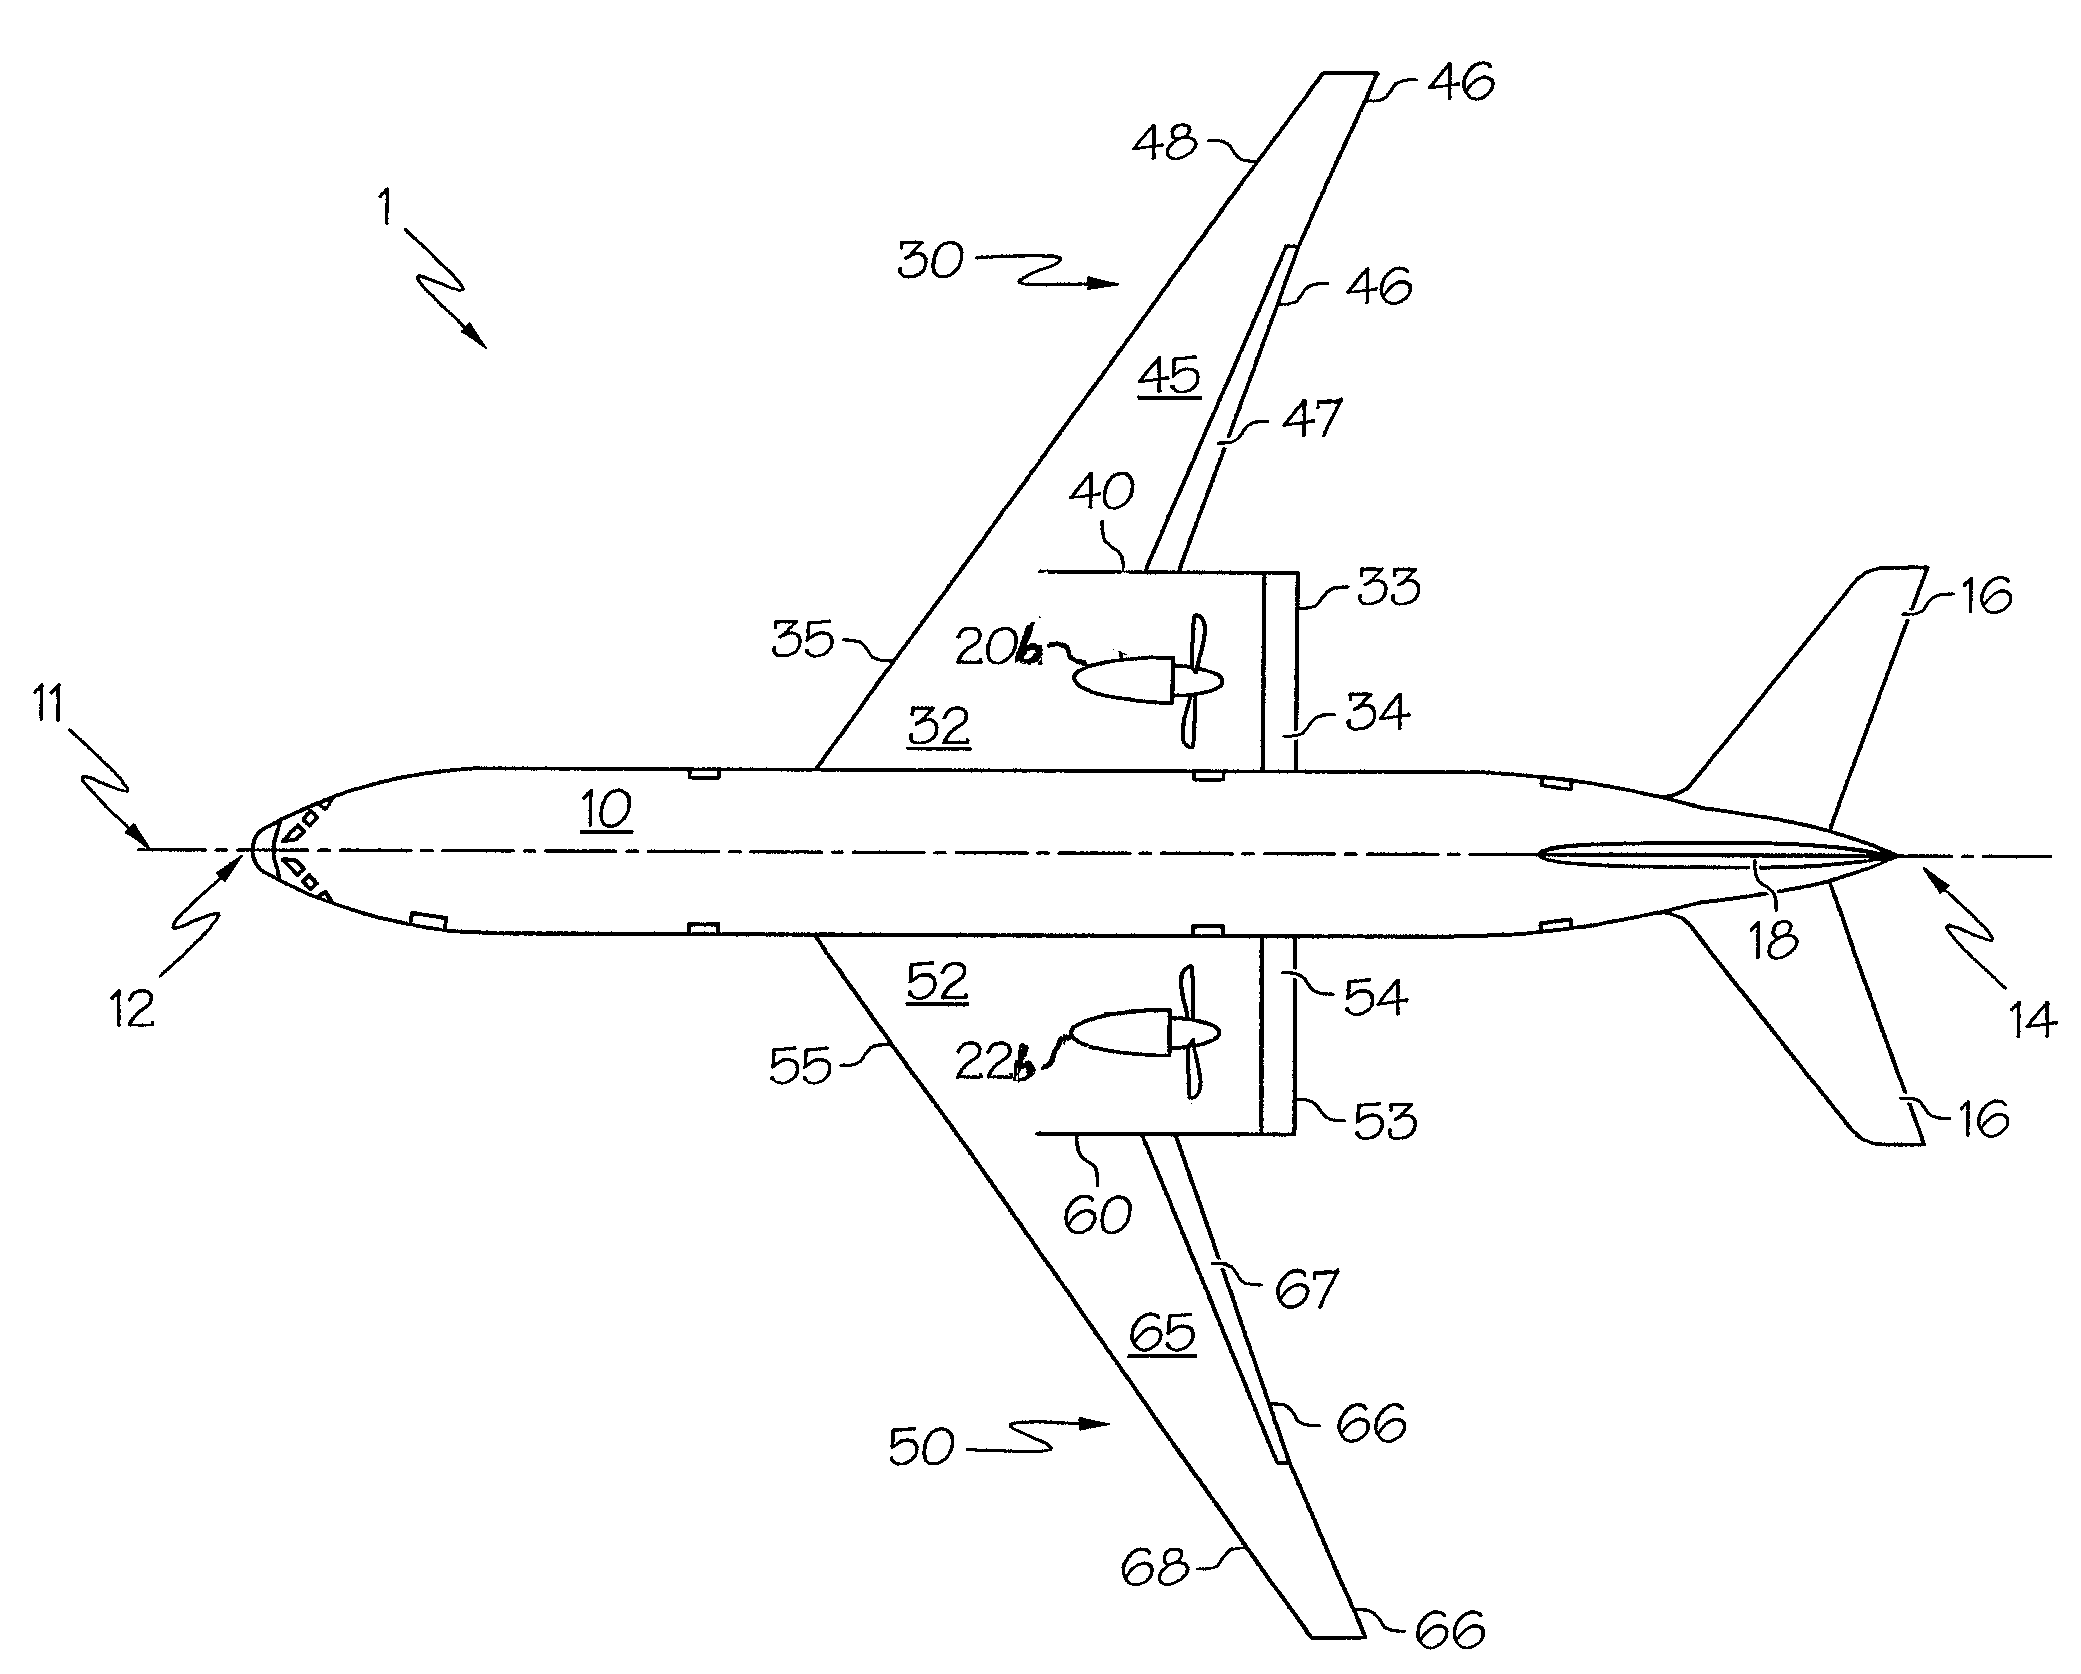 Noise-shielding wing configuration